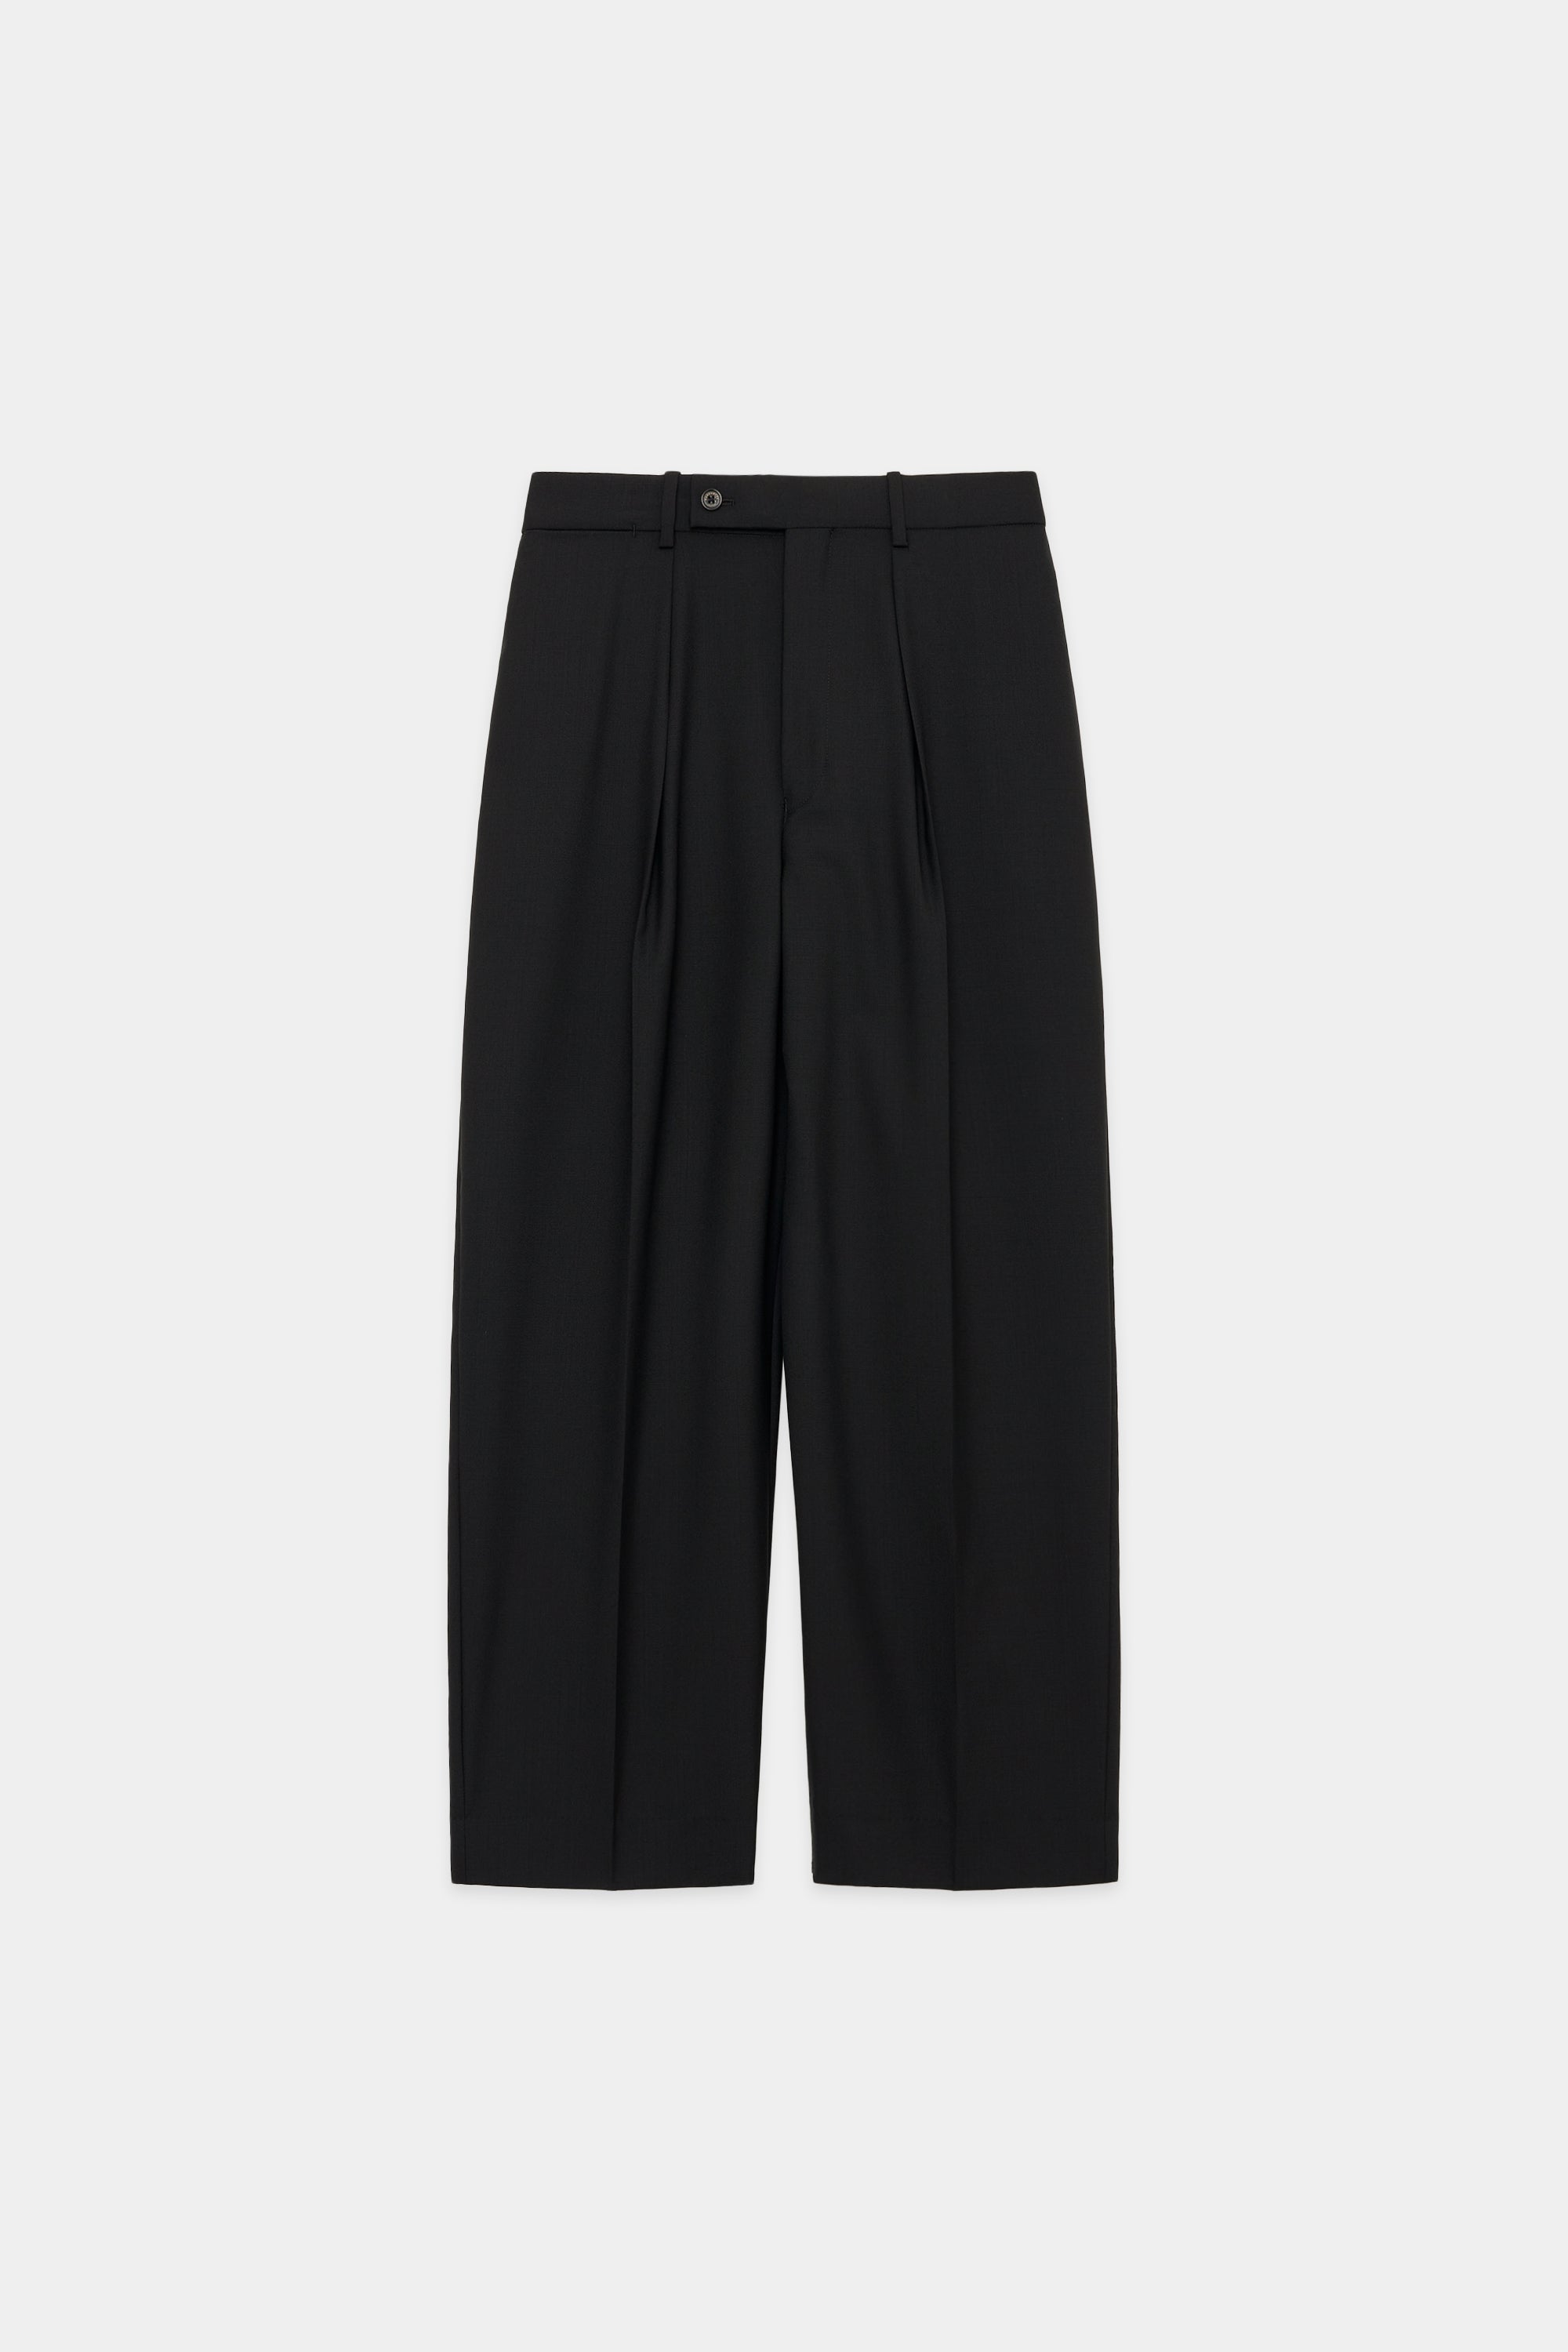 Organic Wool Tropical Classic Fit Trousers, Black